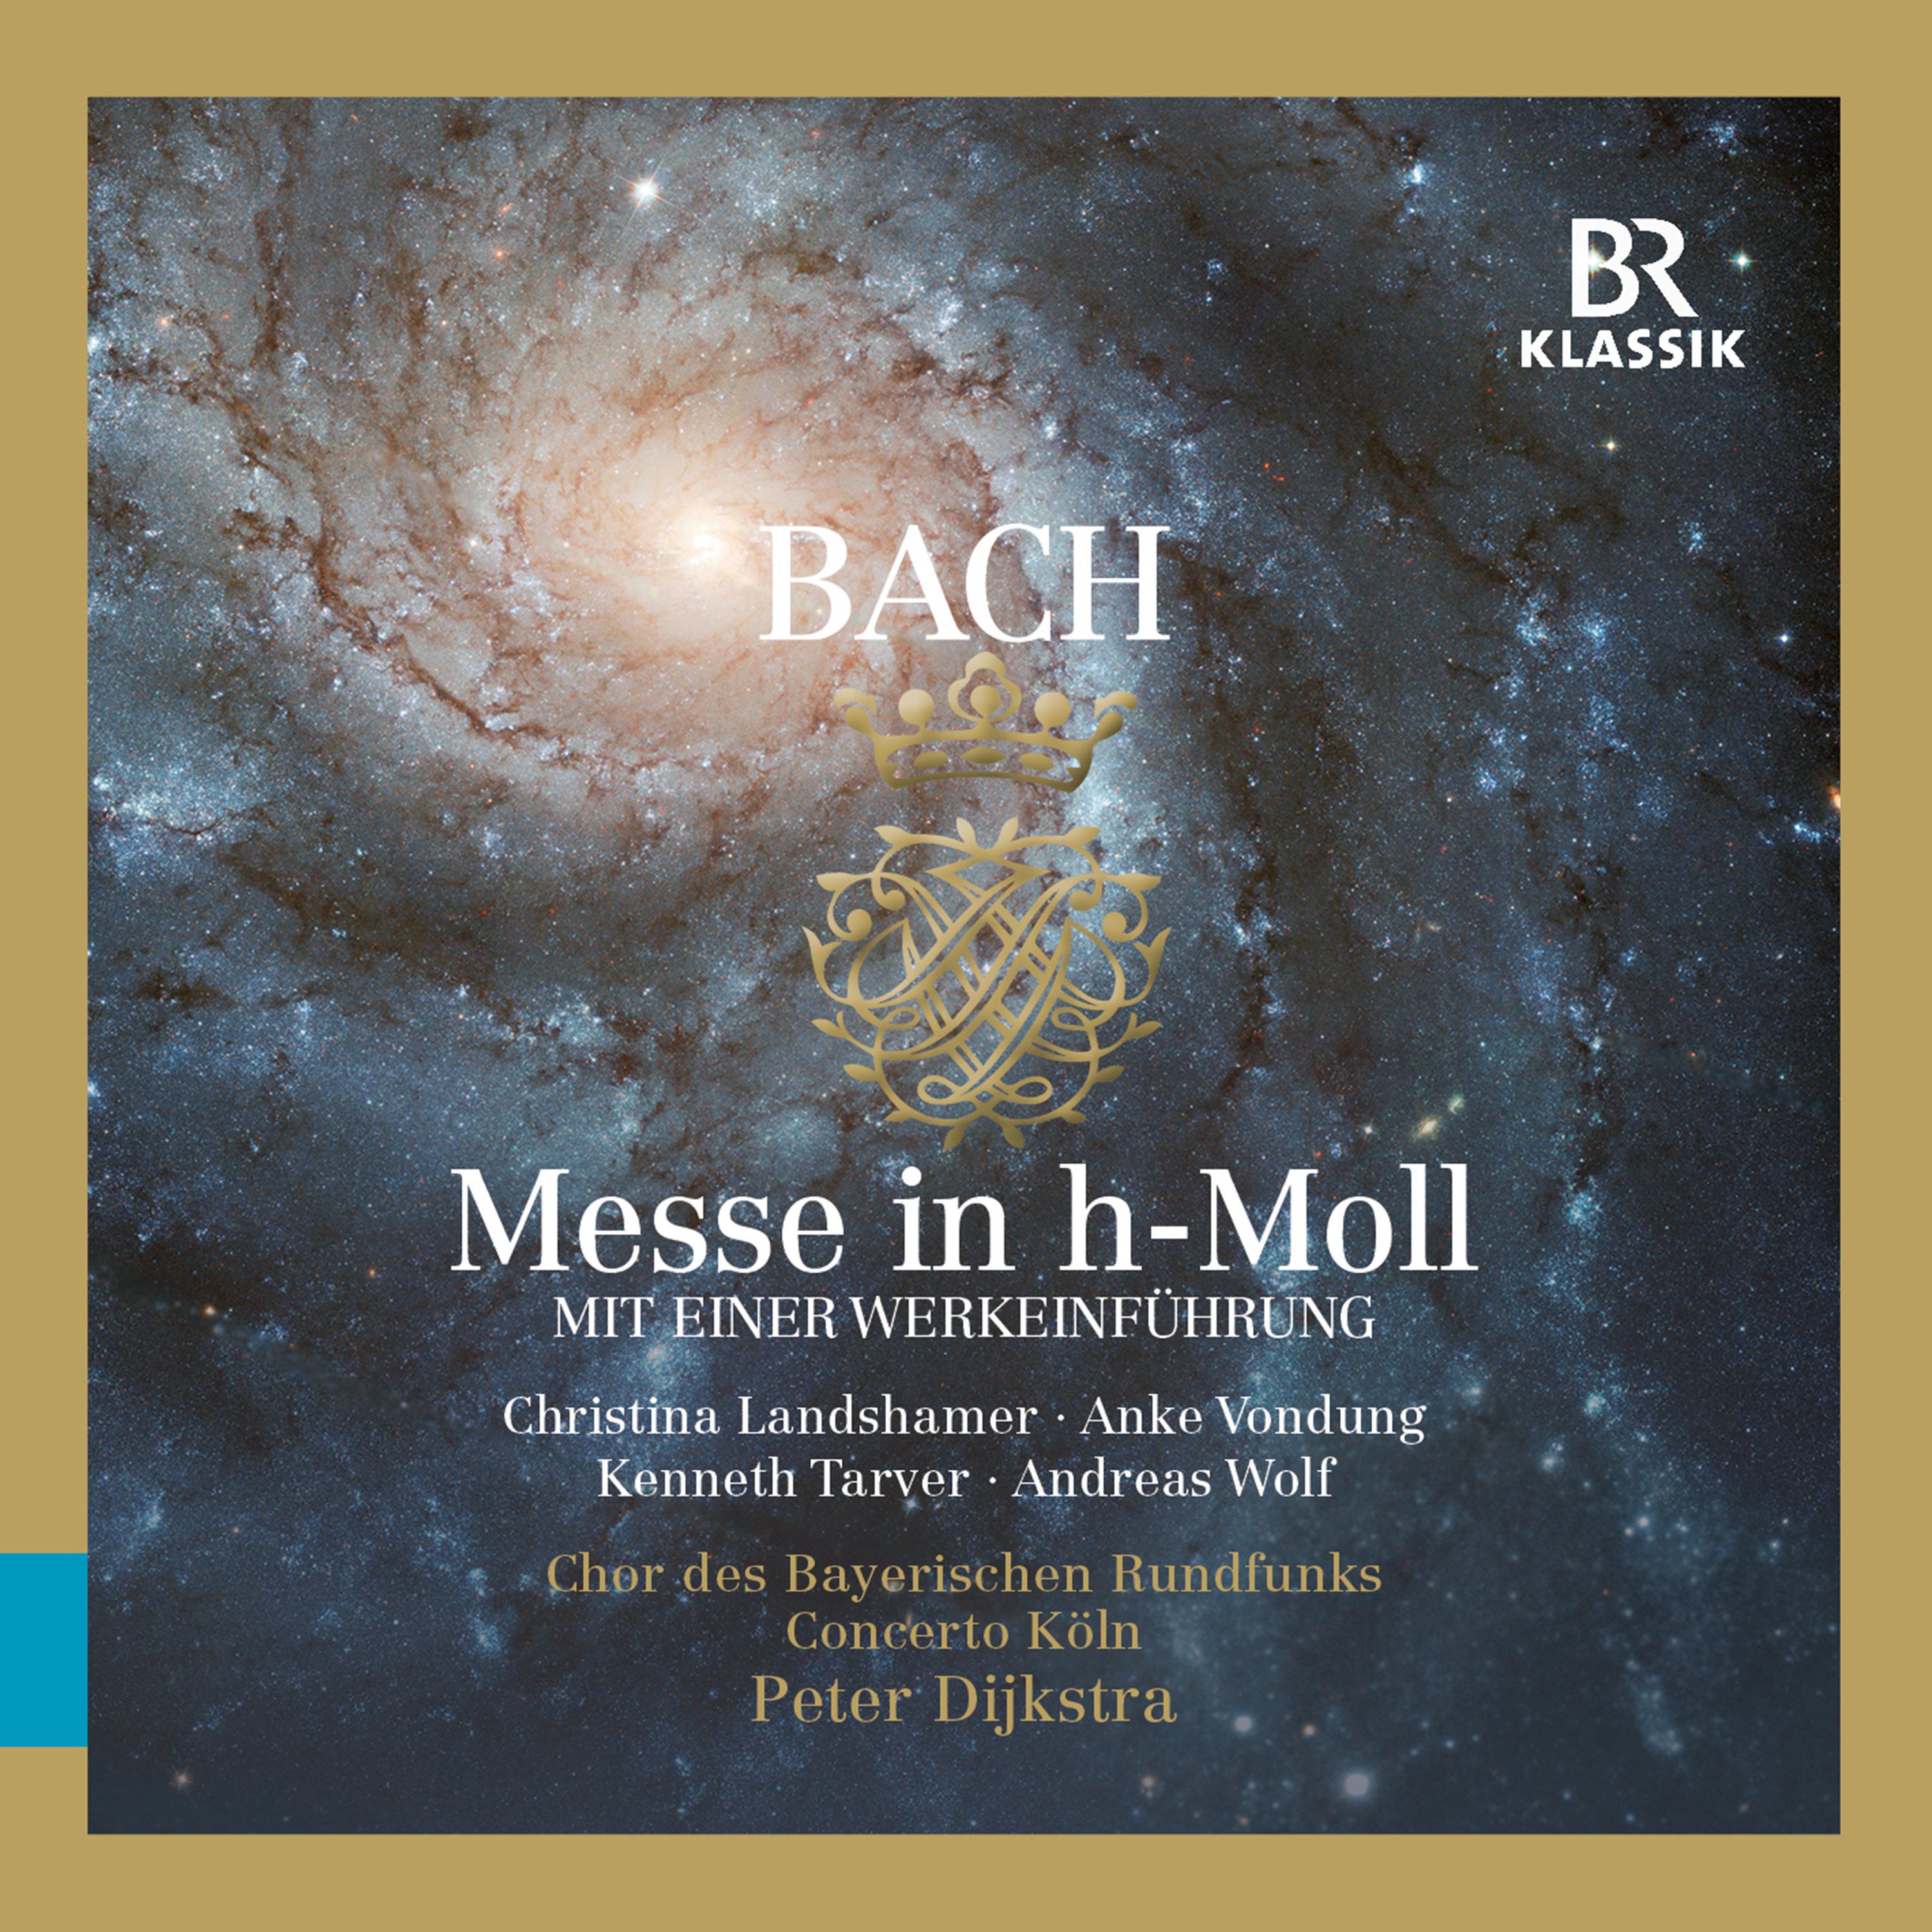 Christian Baumann - Wege zur Musik - Johann Sebastian Bach - Messe in h-Moll: Karriereschub und Glaubensbekenntnis: Der erste Umschlag